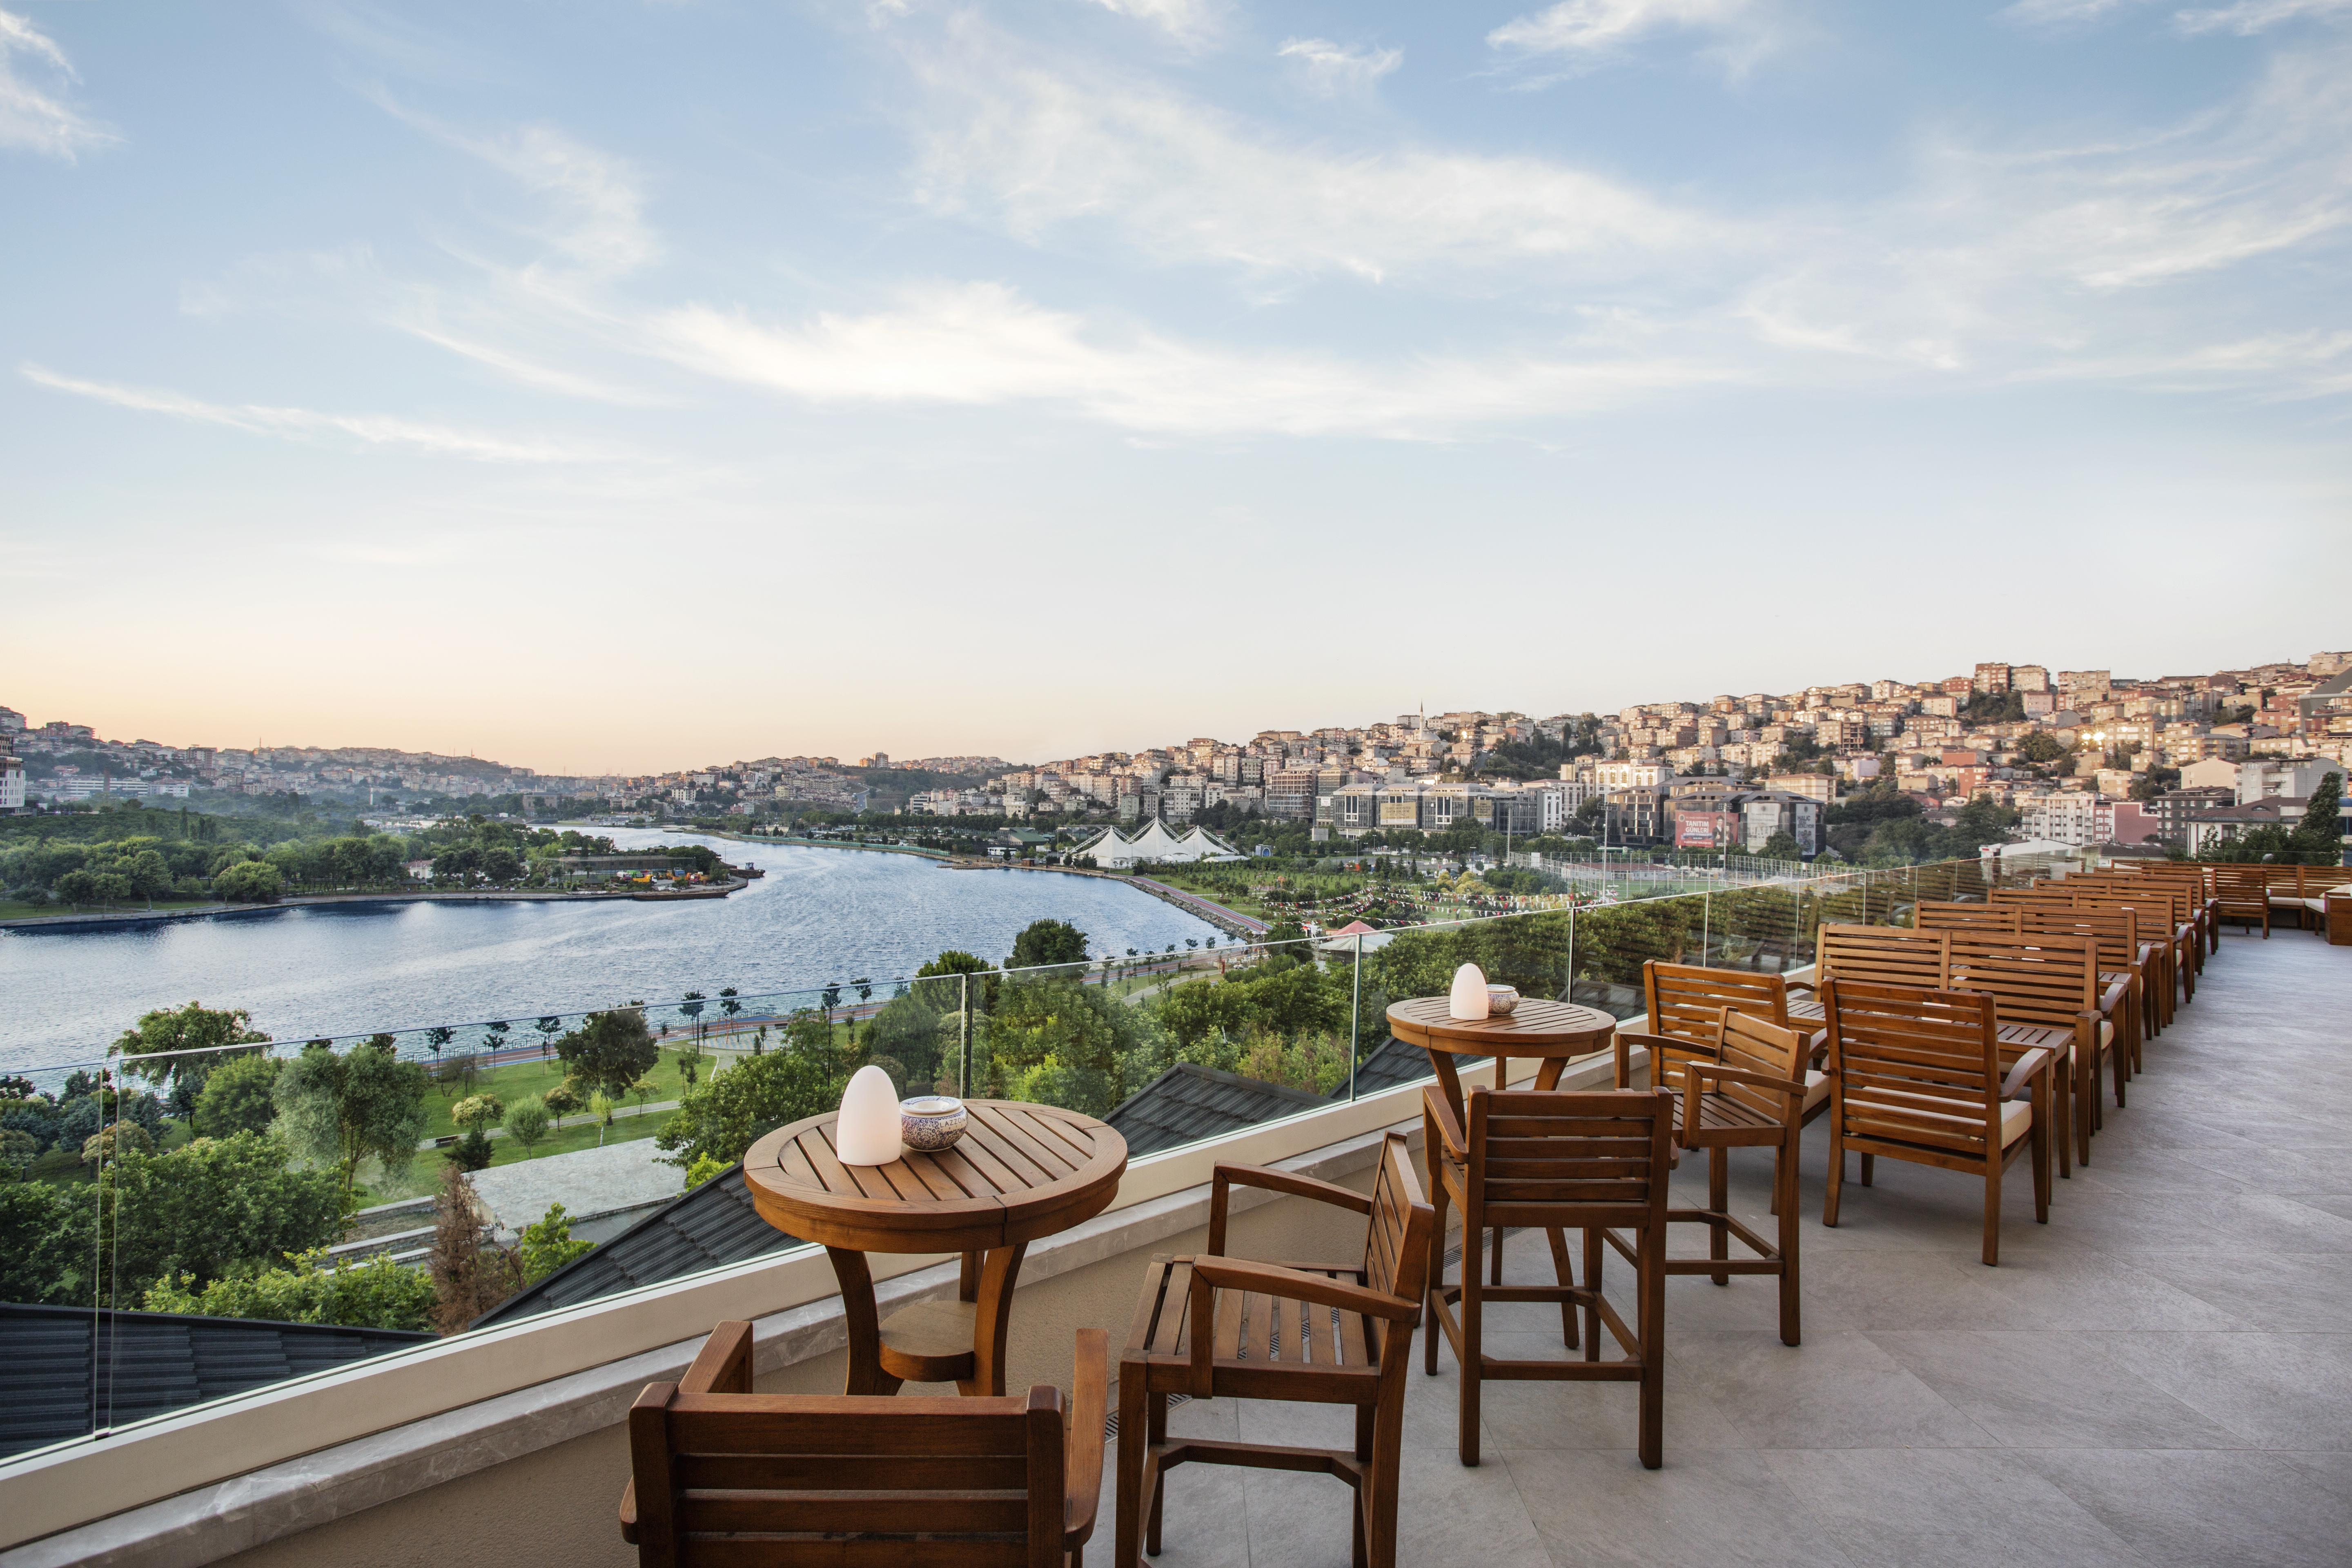 Lazzoni Hotel Istanbul Exterior photo